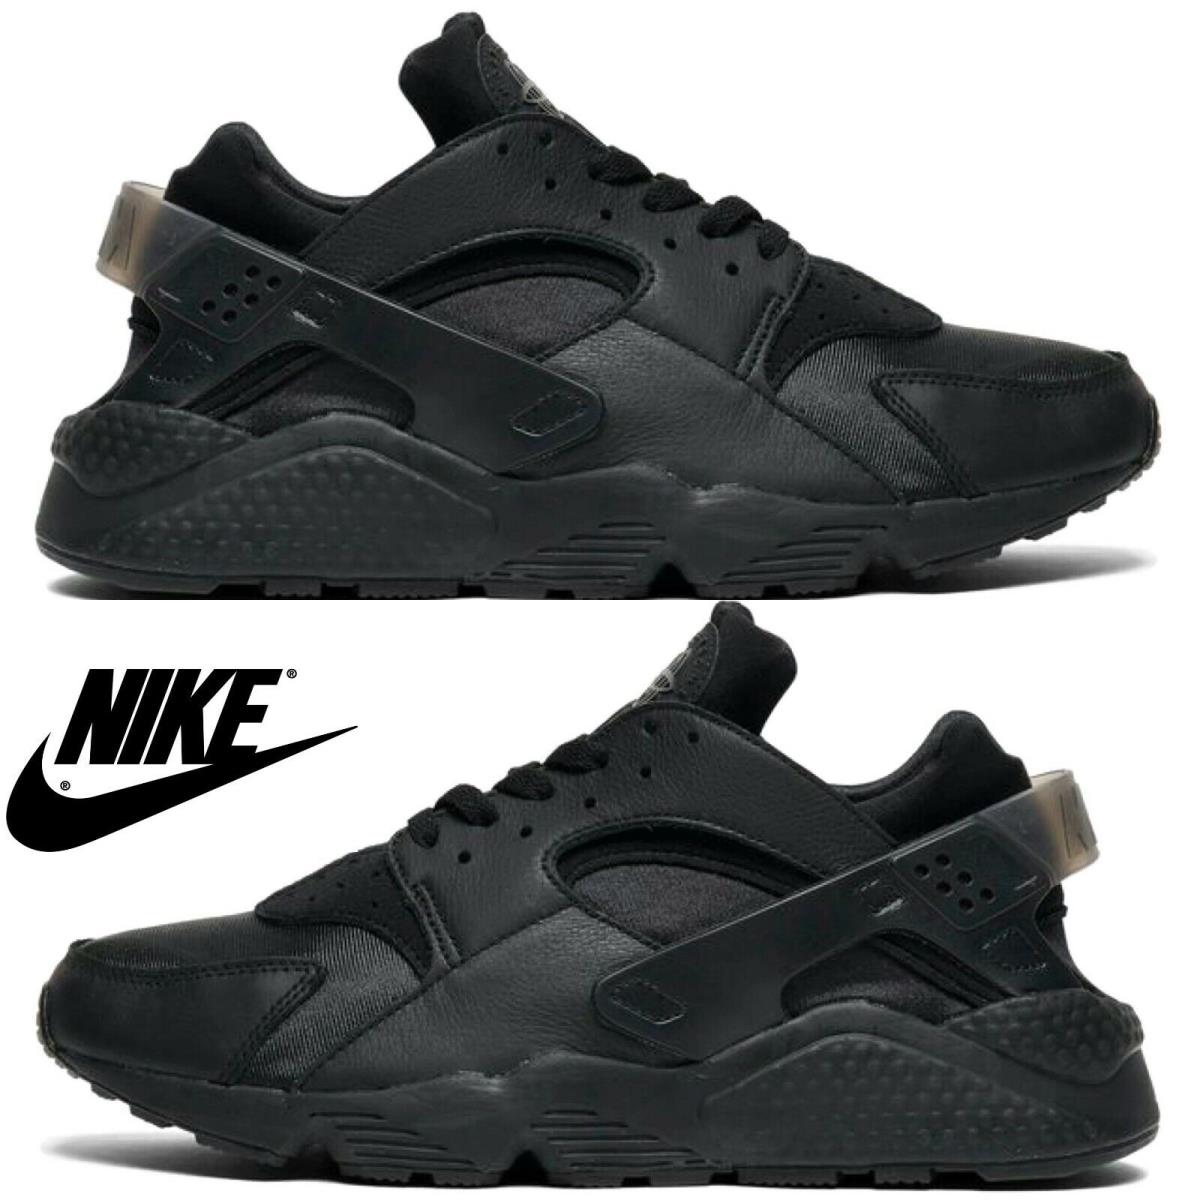 Nike Air Huarache Men`s Casual Shoes Running Athletic Comfort Sport Black - Black , Black/Black/Anthracite Manufacturer